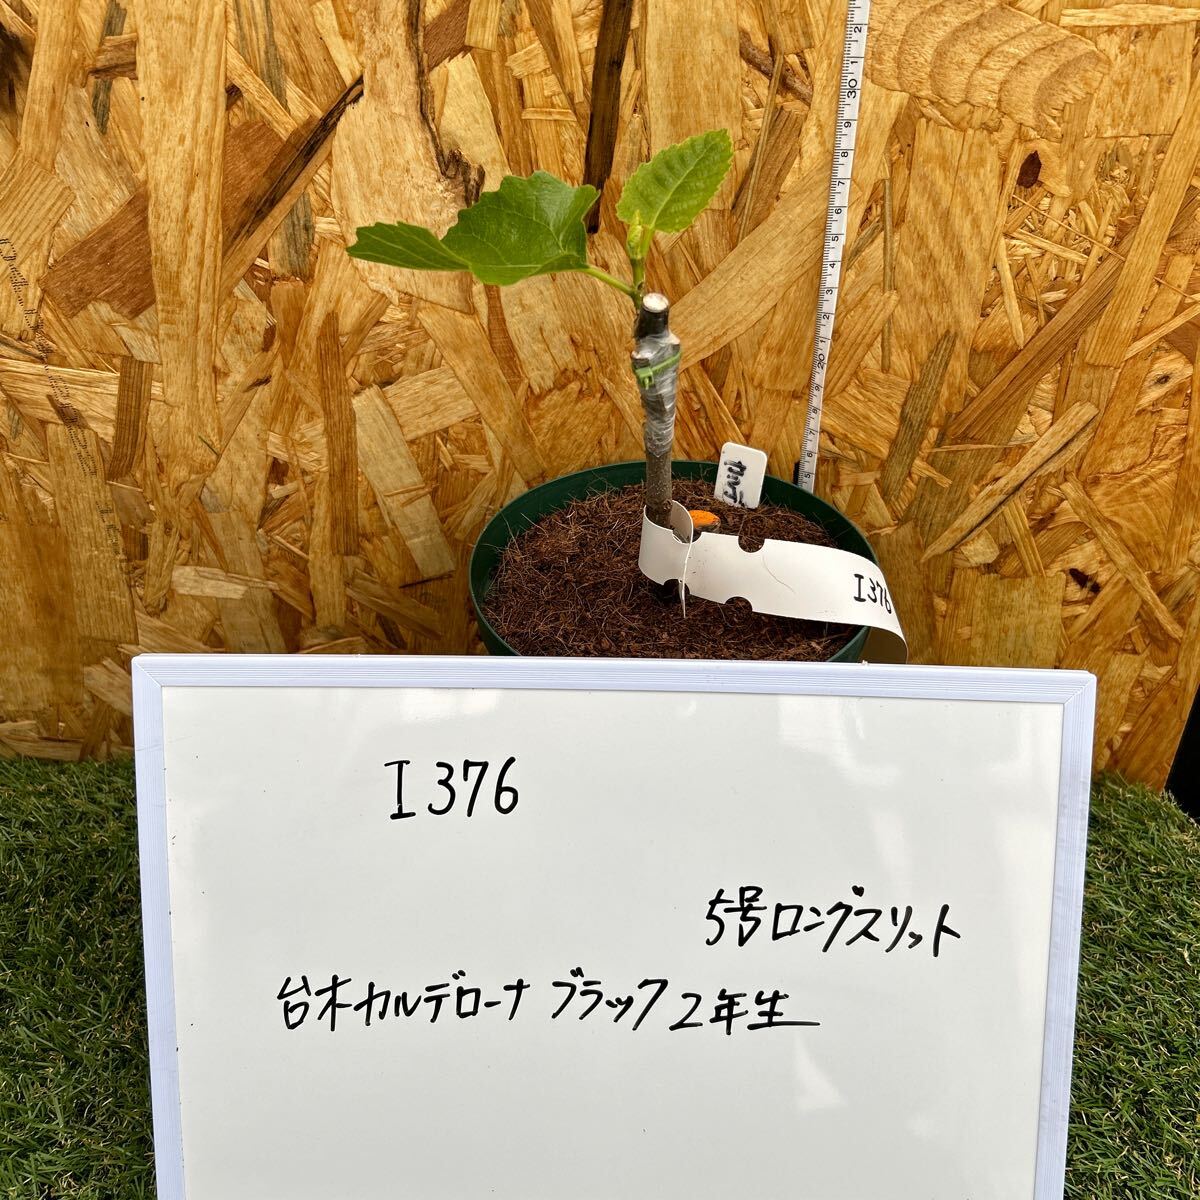 ichi axis seedling I376 ( italian 376 ) connection tree seedling 